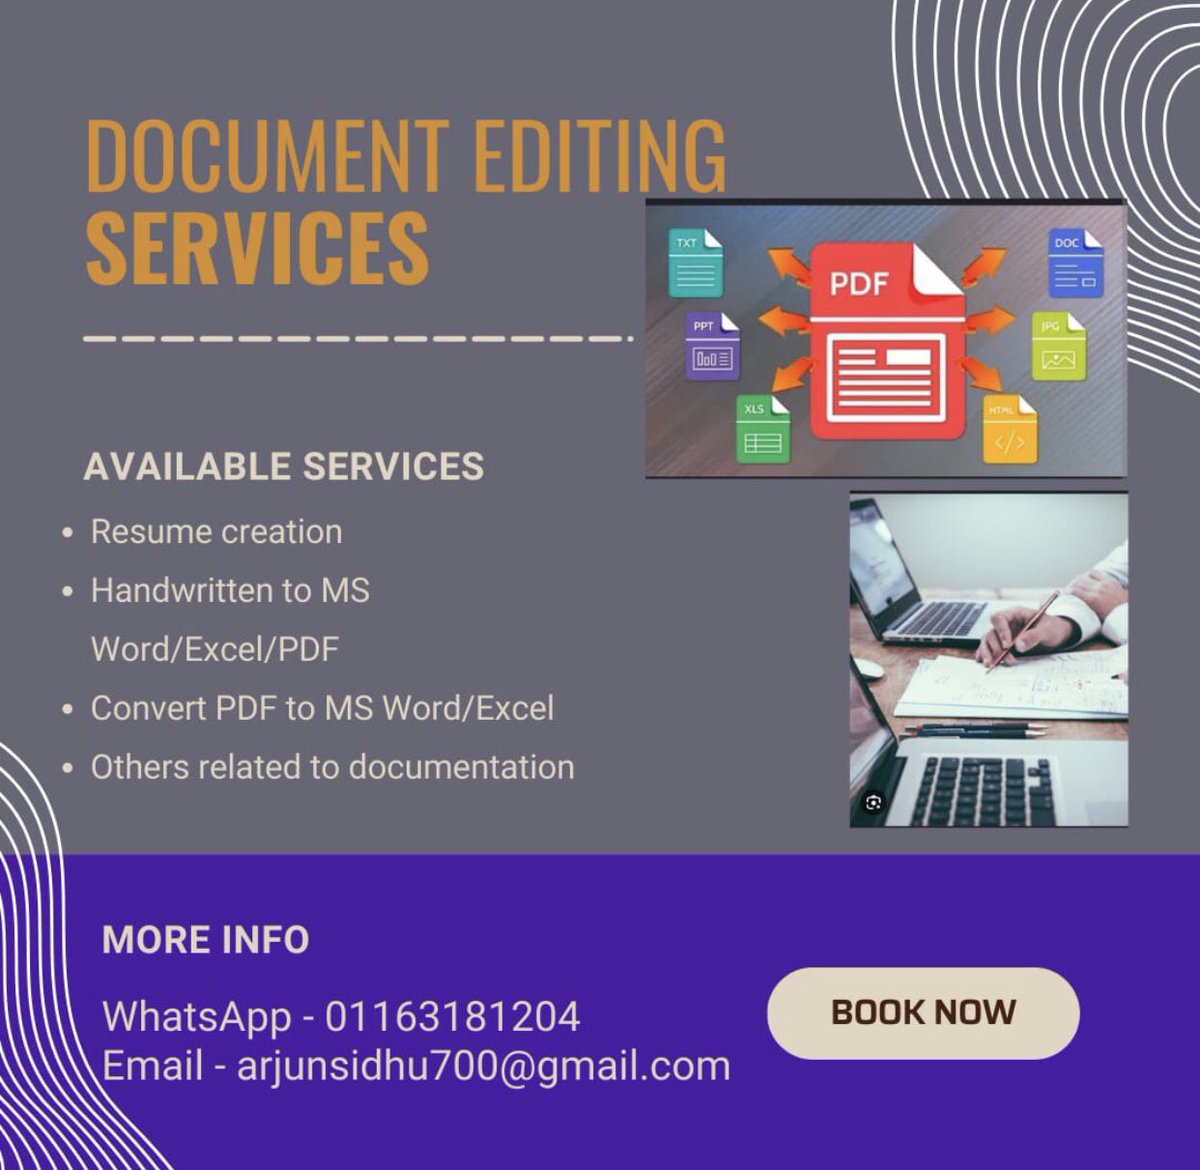 Freelance editing services.
#freelancemalaysia,#kerjafreelance,#freelancejobs,